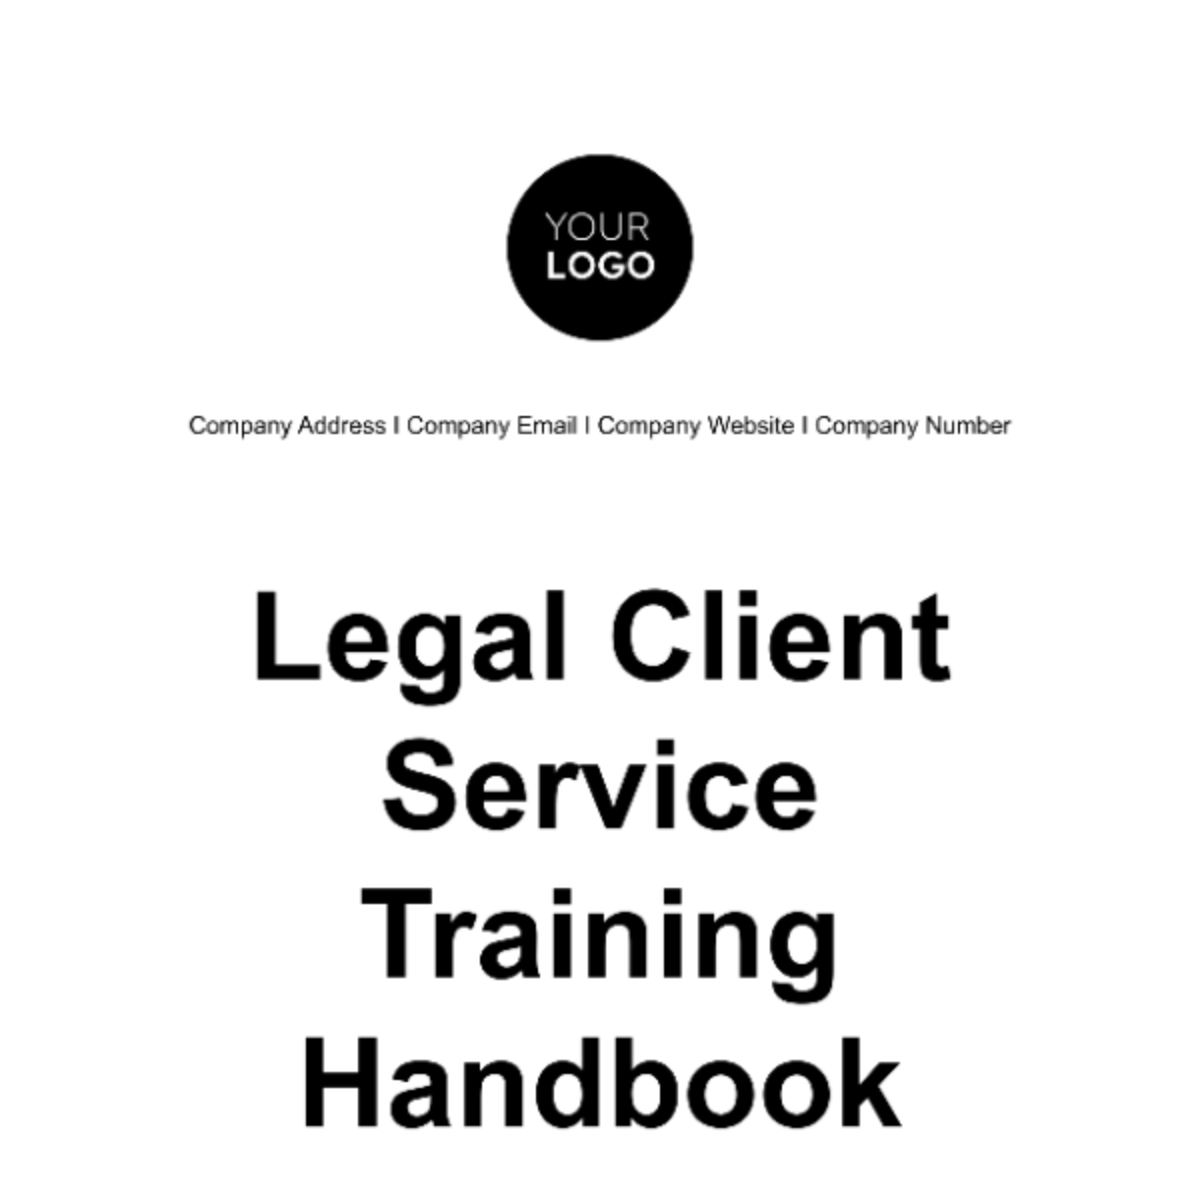 Free Legal Client Service Training Handbook Template